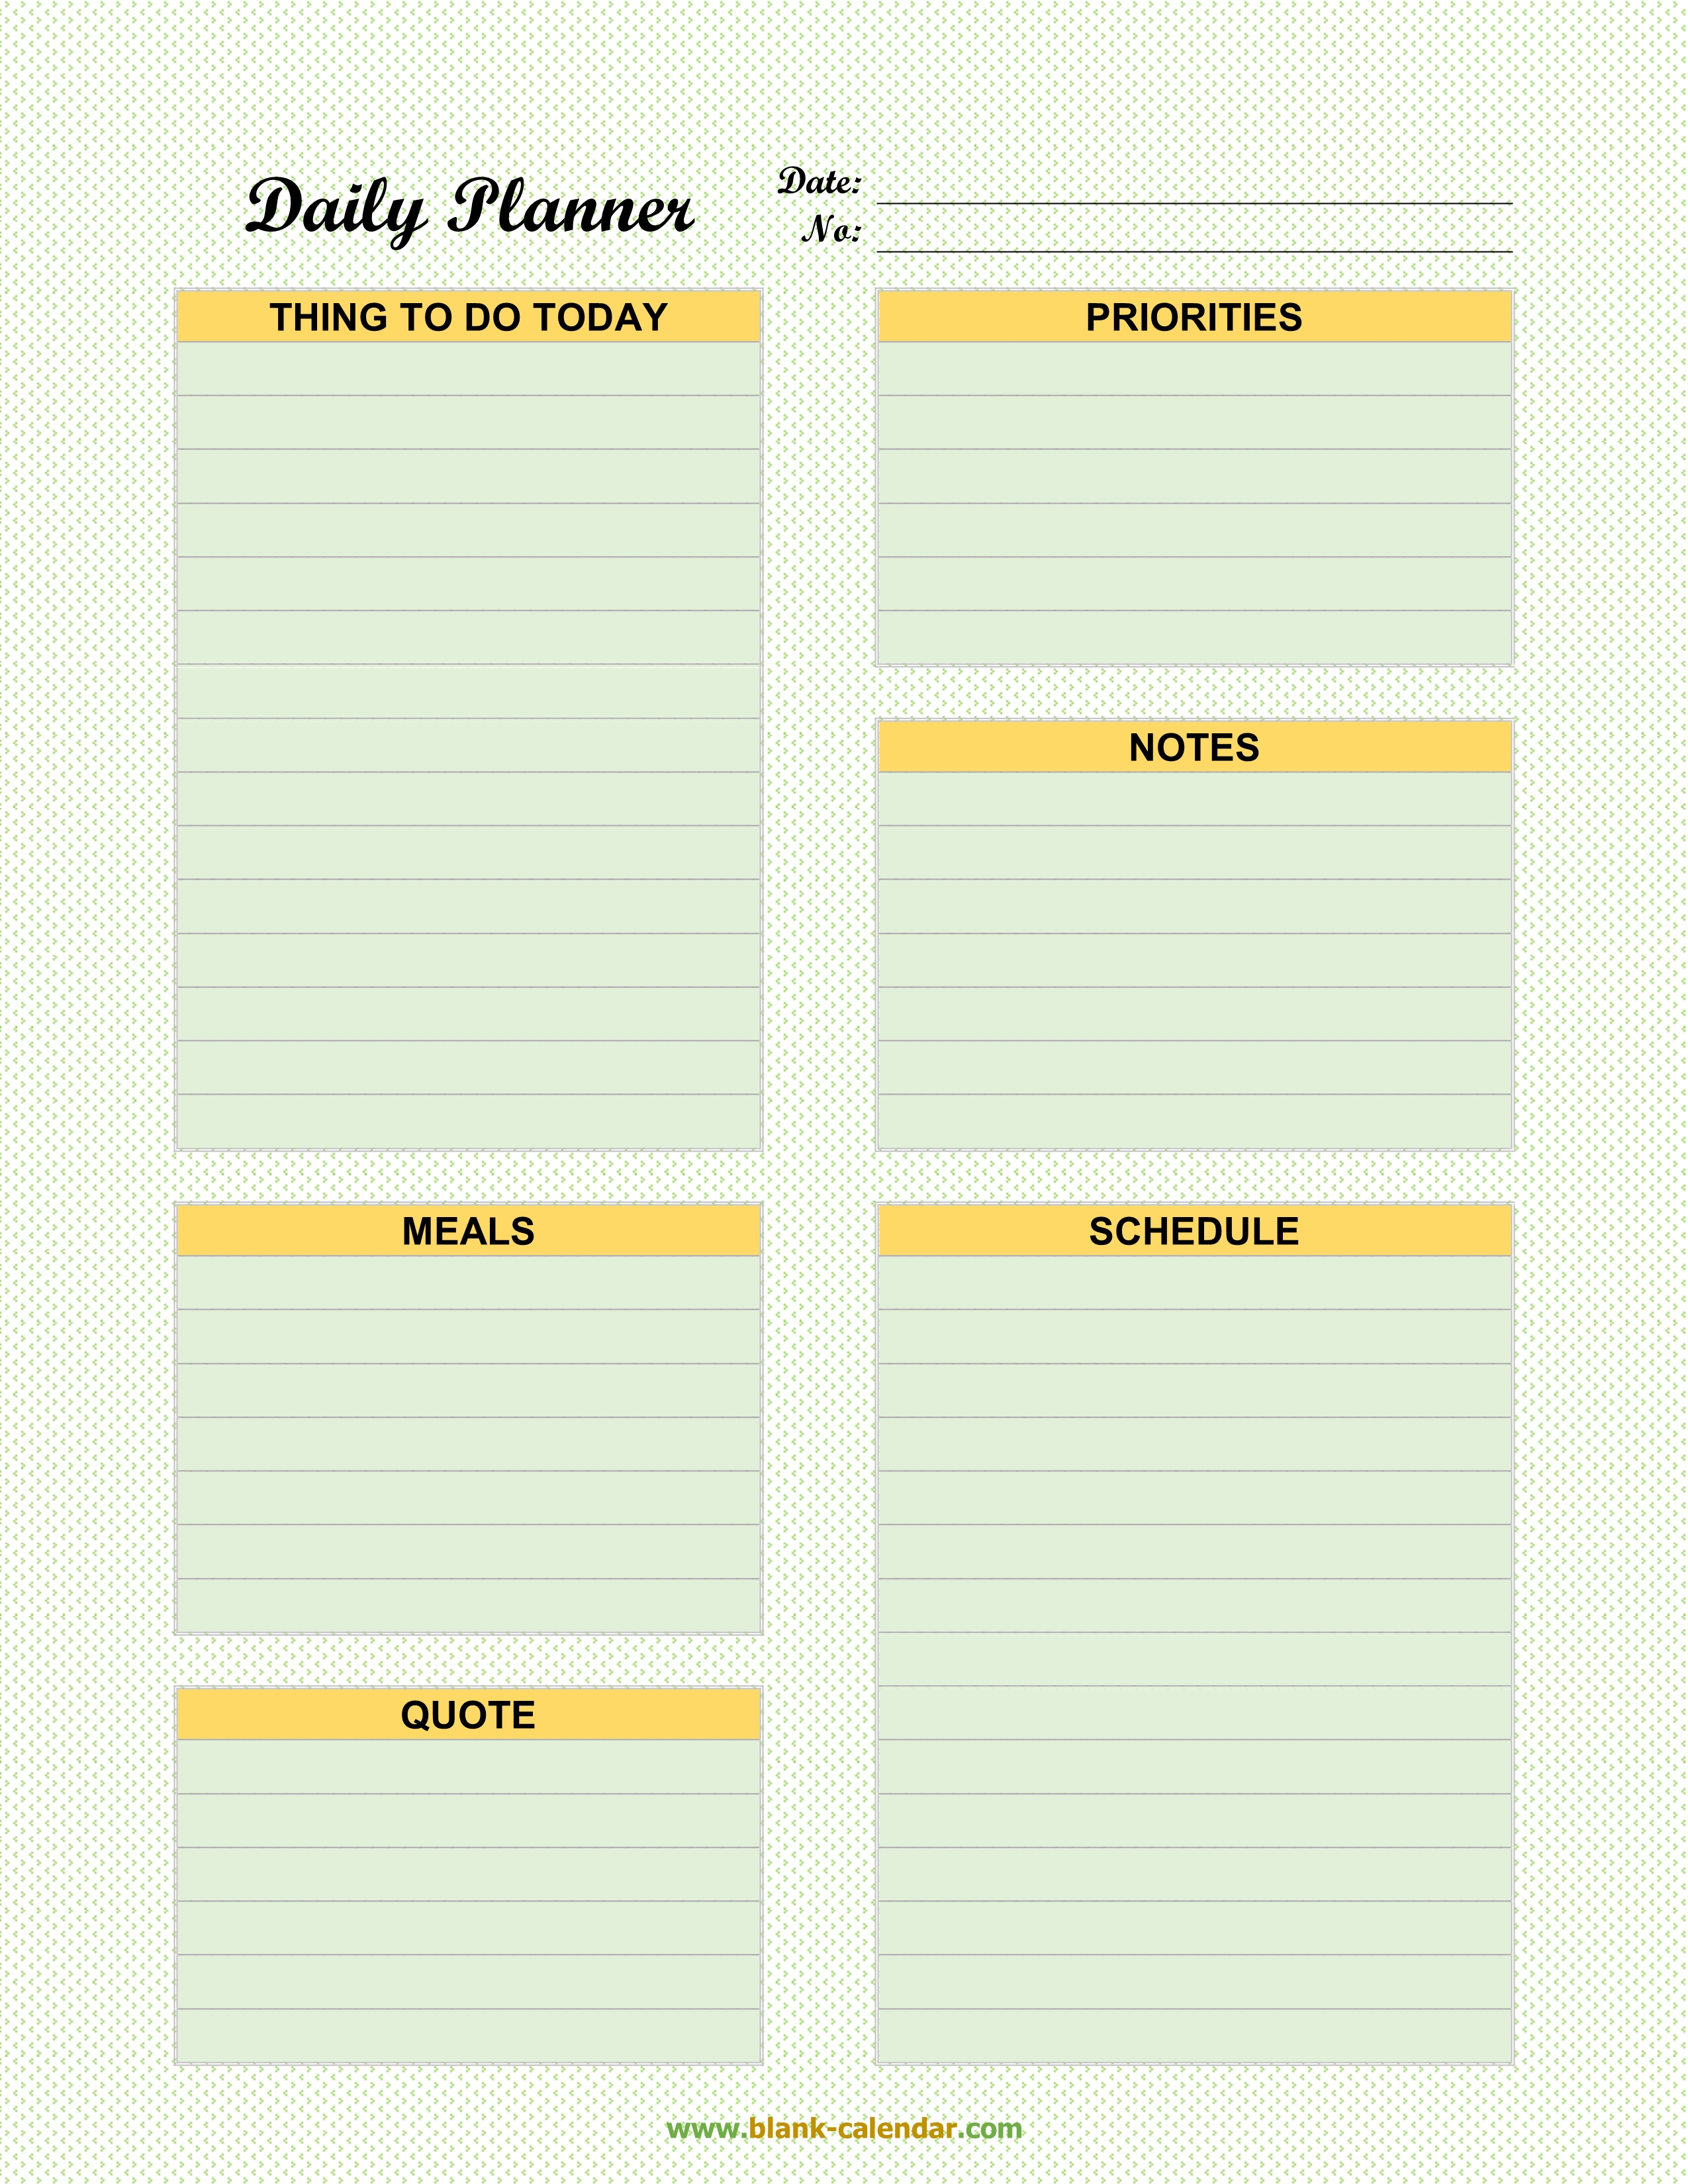 Personal Schedule Template from www.blank-calendar.com